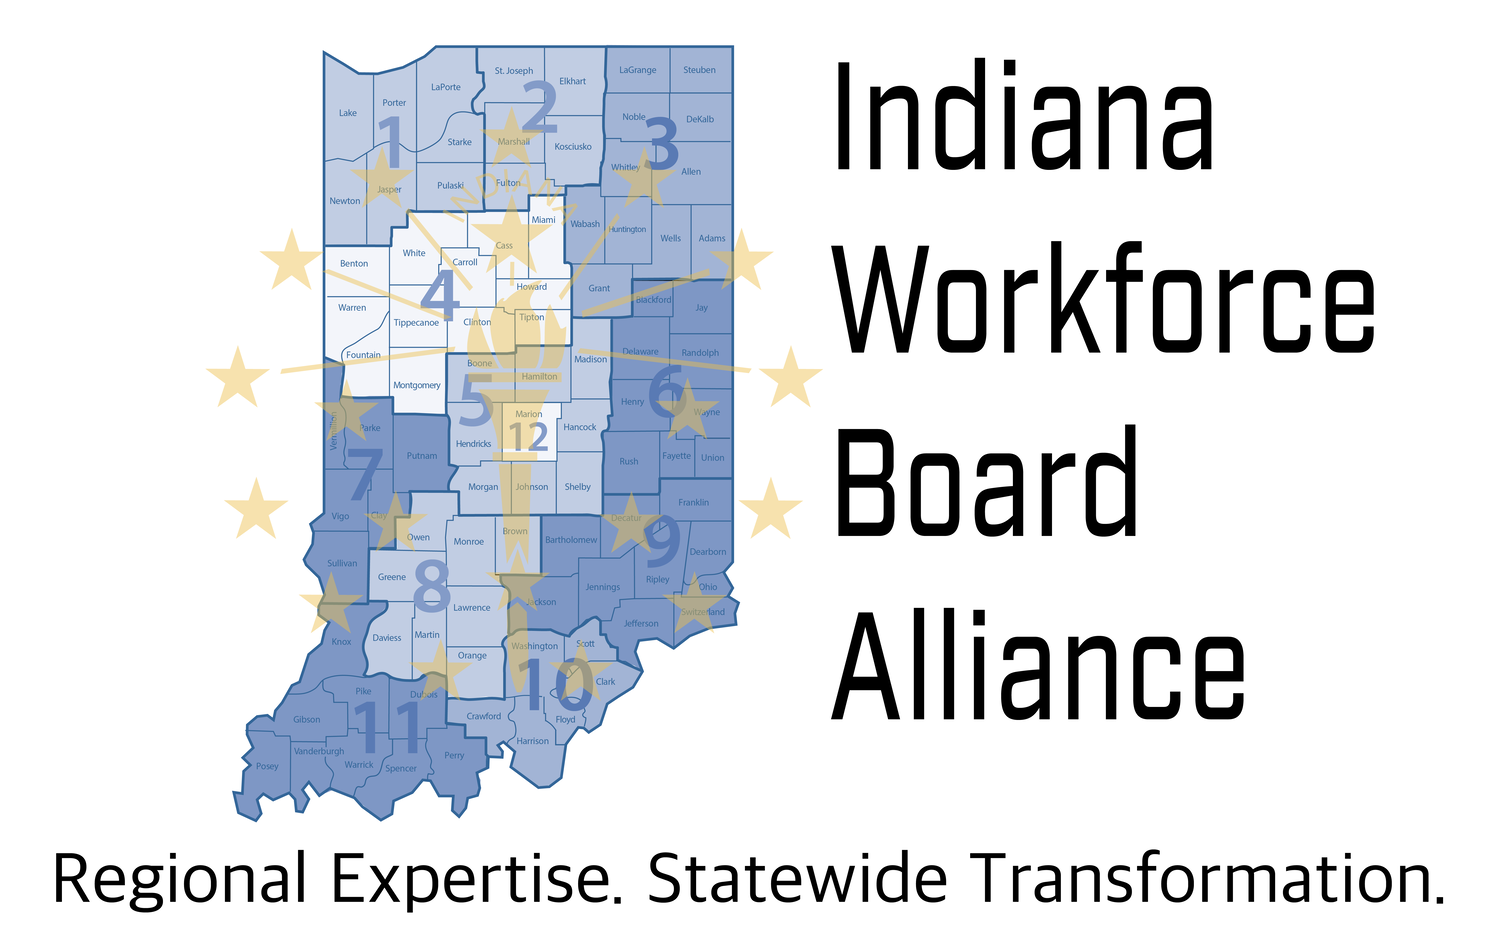 Indiana Workforce Board Alliance